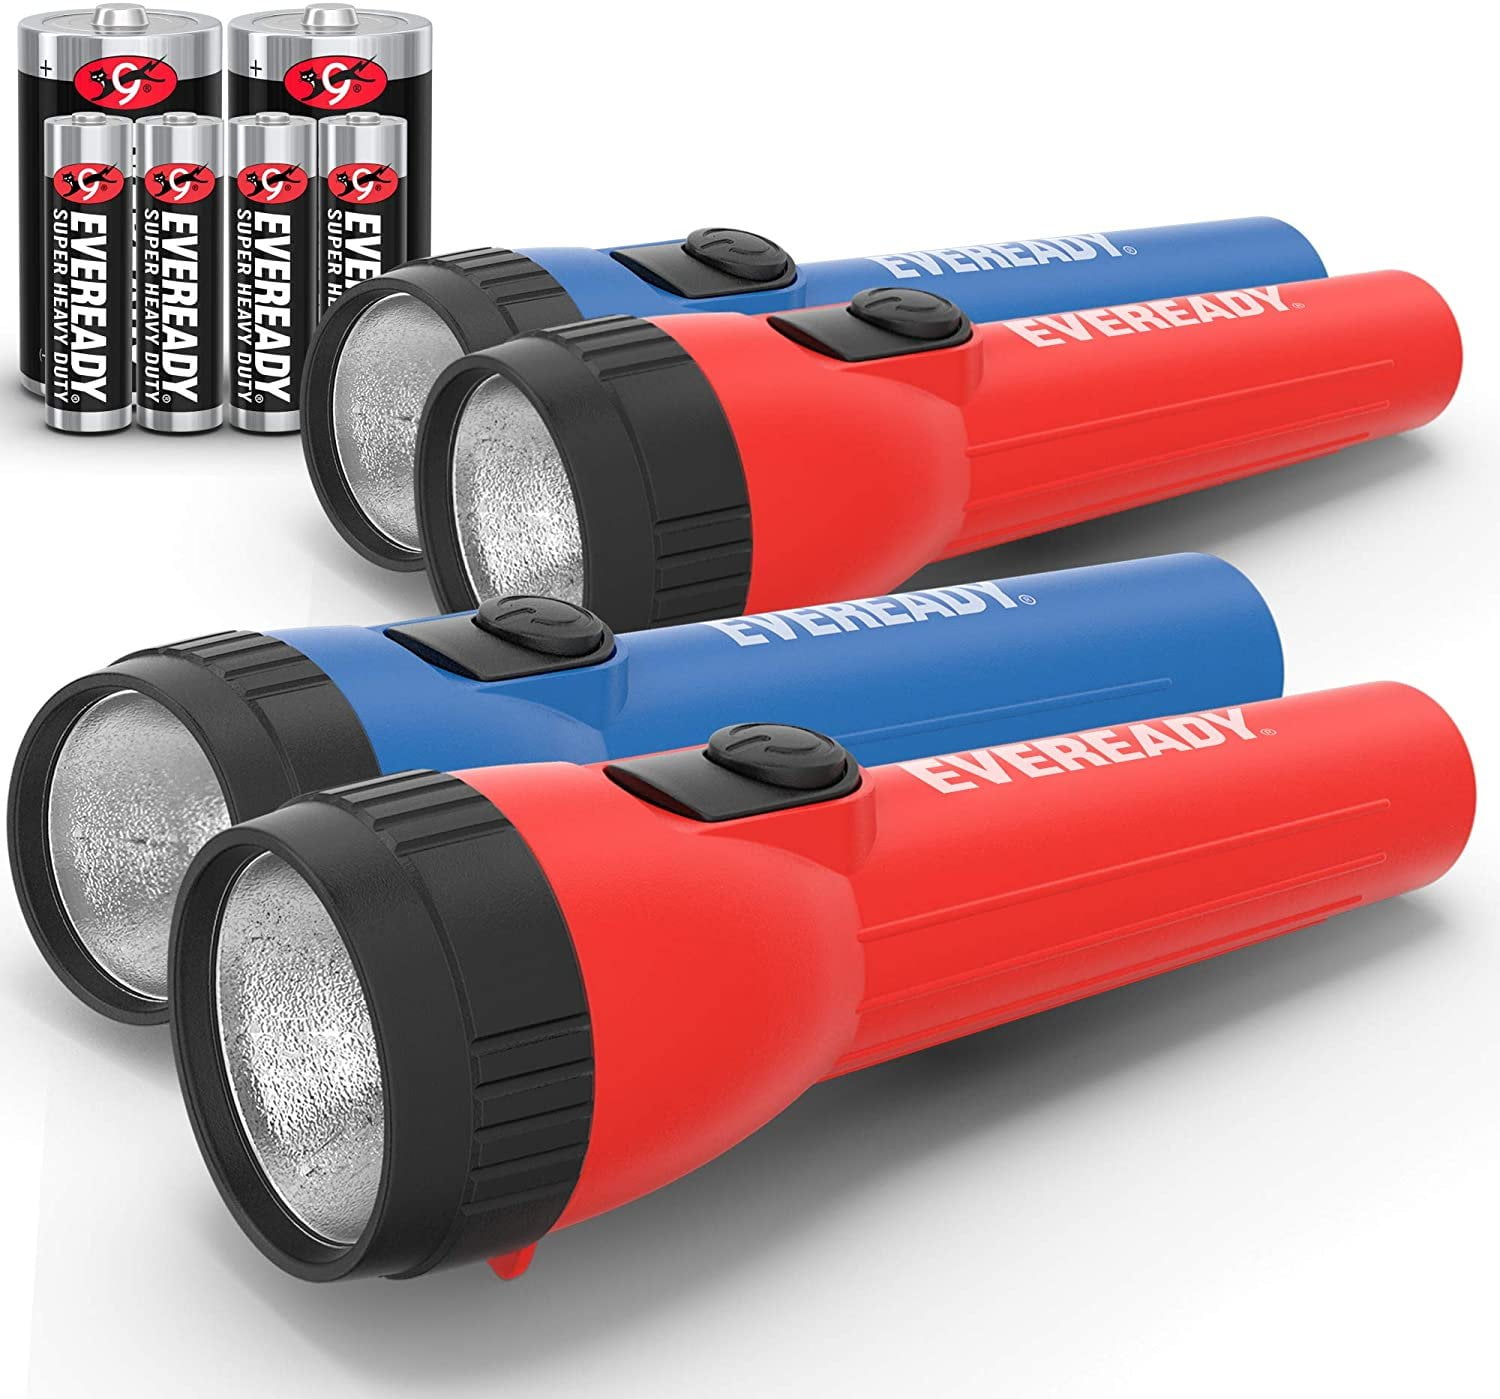 Eveready 3 Led Metal Flashlight, Includes 3 Aaa Batteries, Wrist Lanyard  EVML33ASD